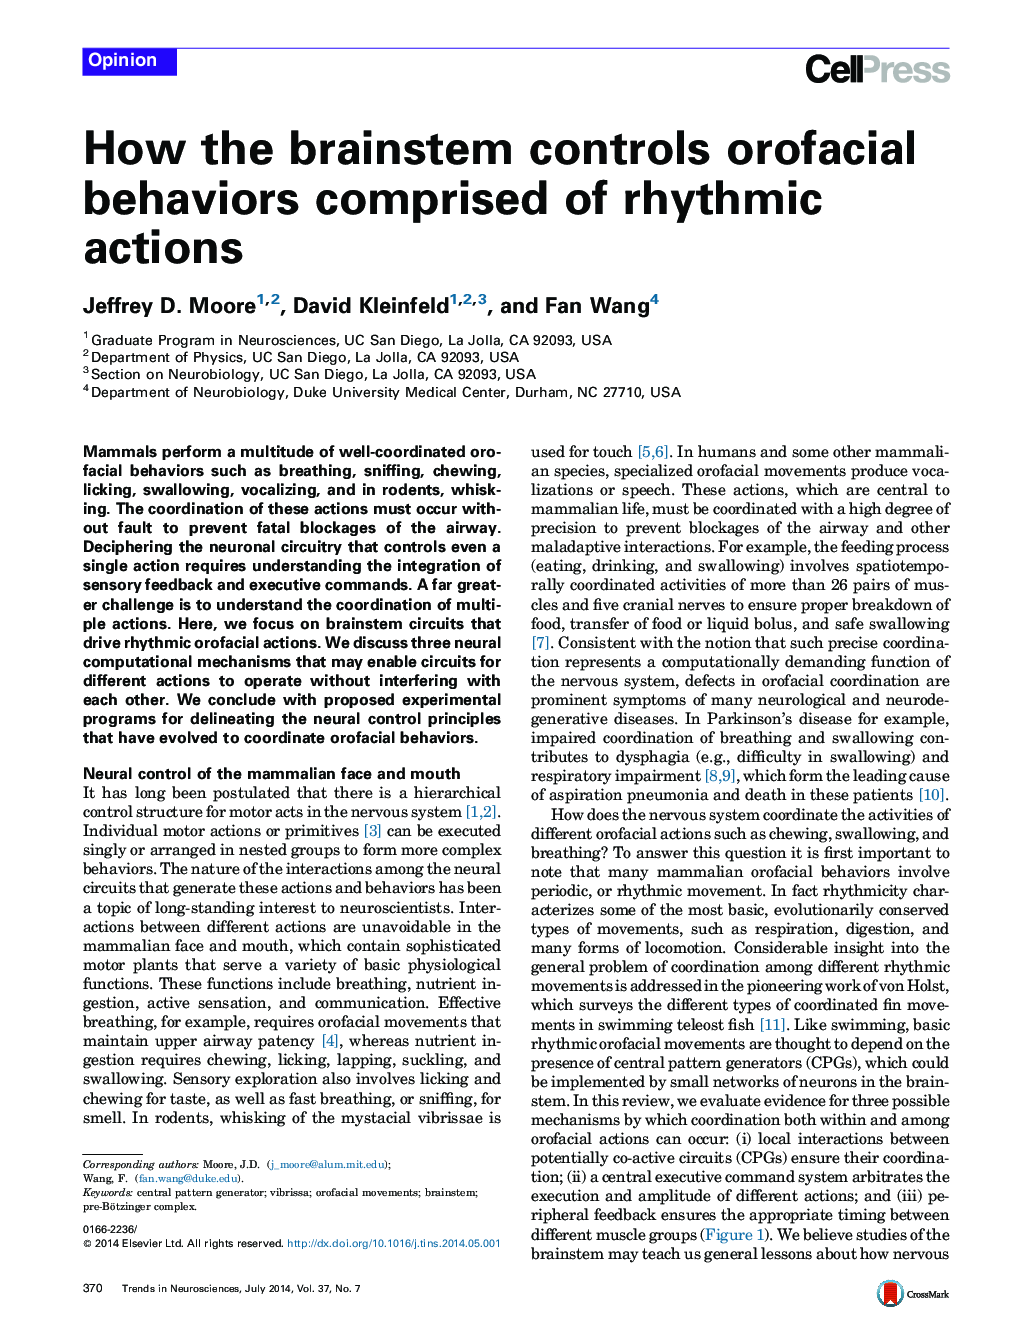 How the brainstem controls orofacial behaviors comprised of rhythmic actions